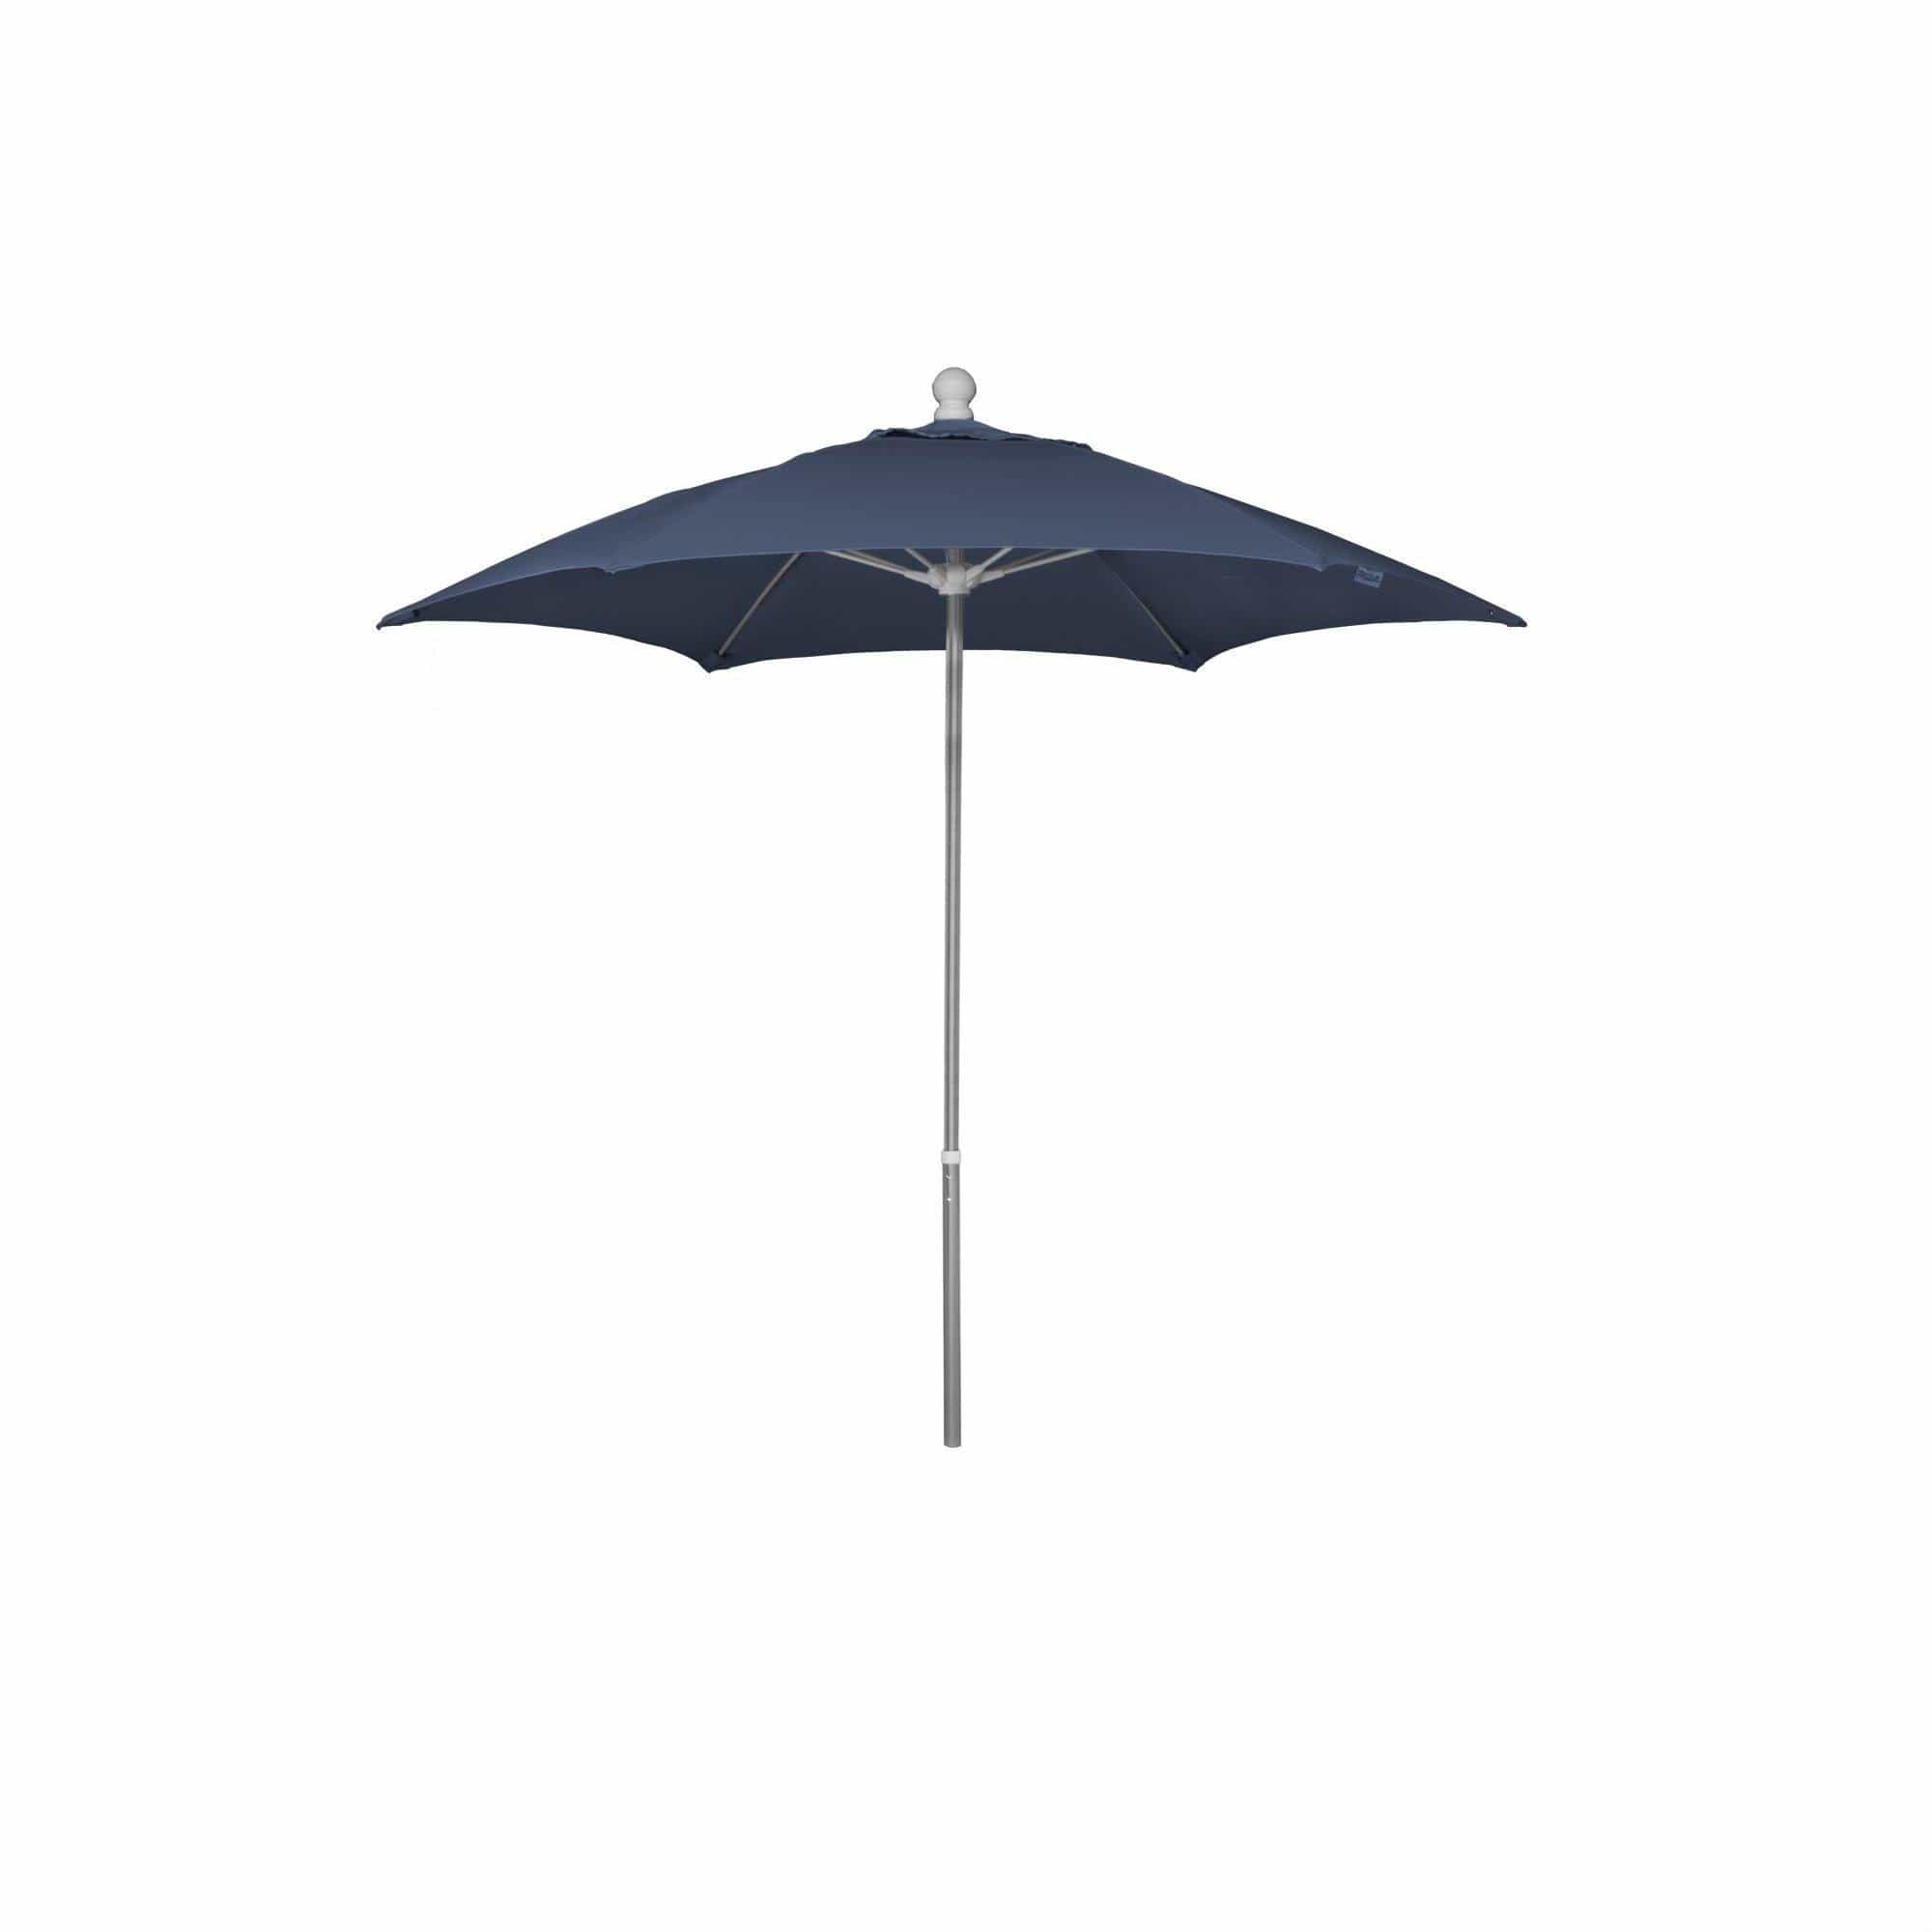 Fiberbuilt Table Umbrellas Navy Blue 7.5' Hex Terrace Umbrella 6 Rib Push Up Bright Aluminum  Solution Dyed Acrylic Canopy